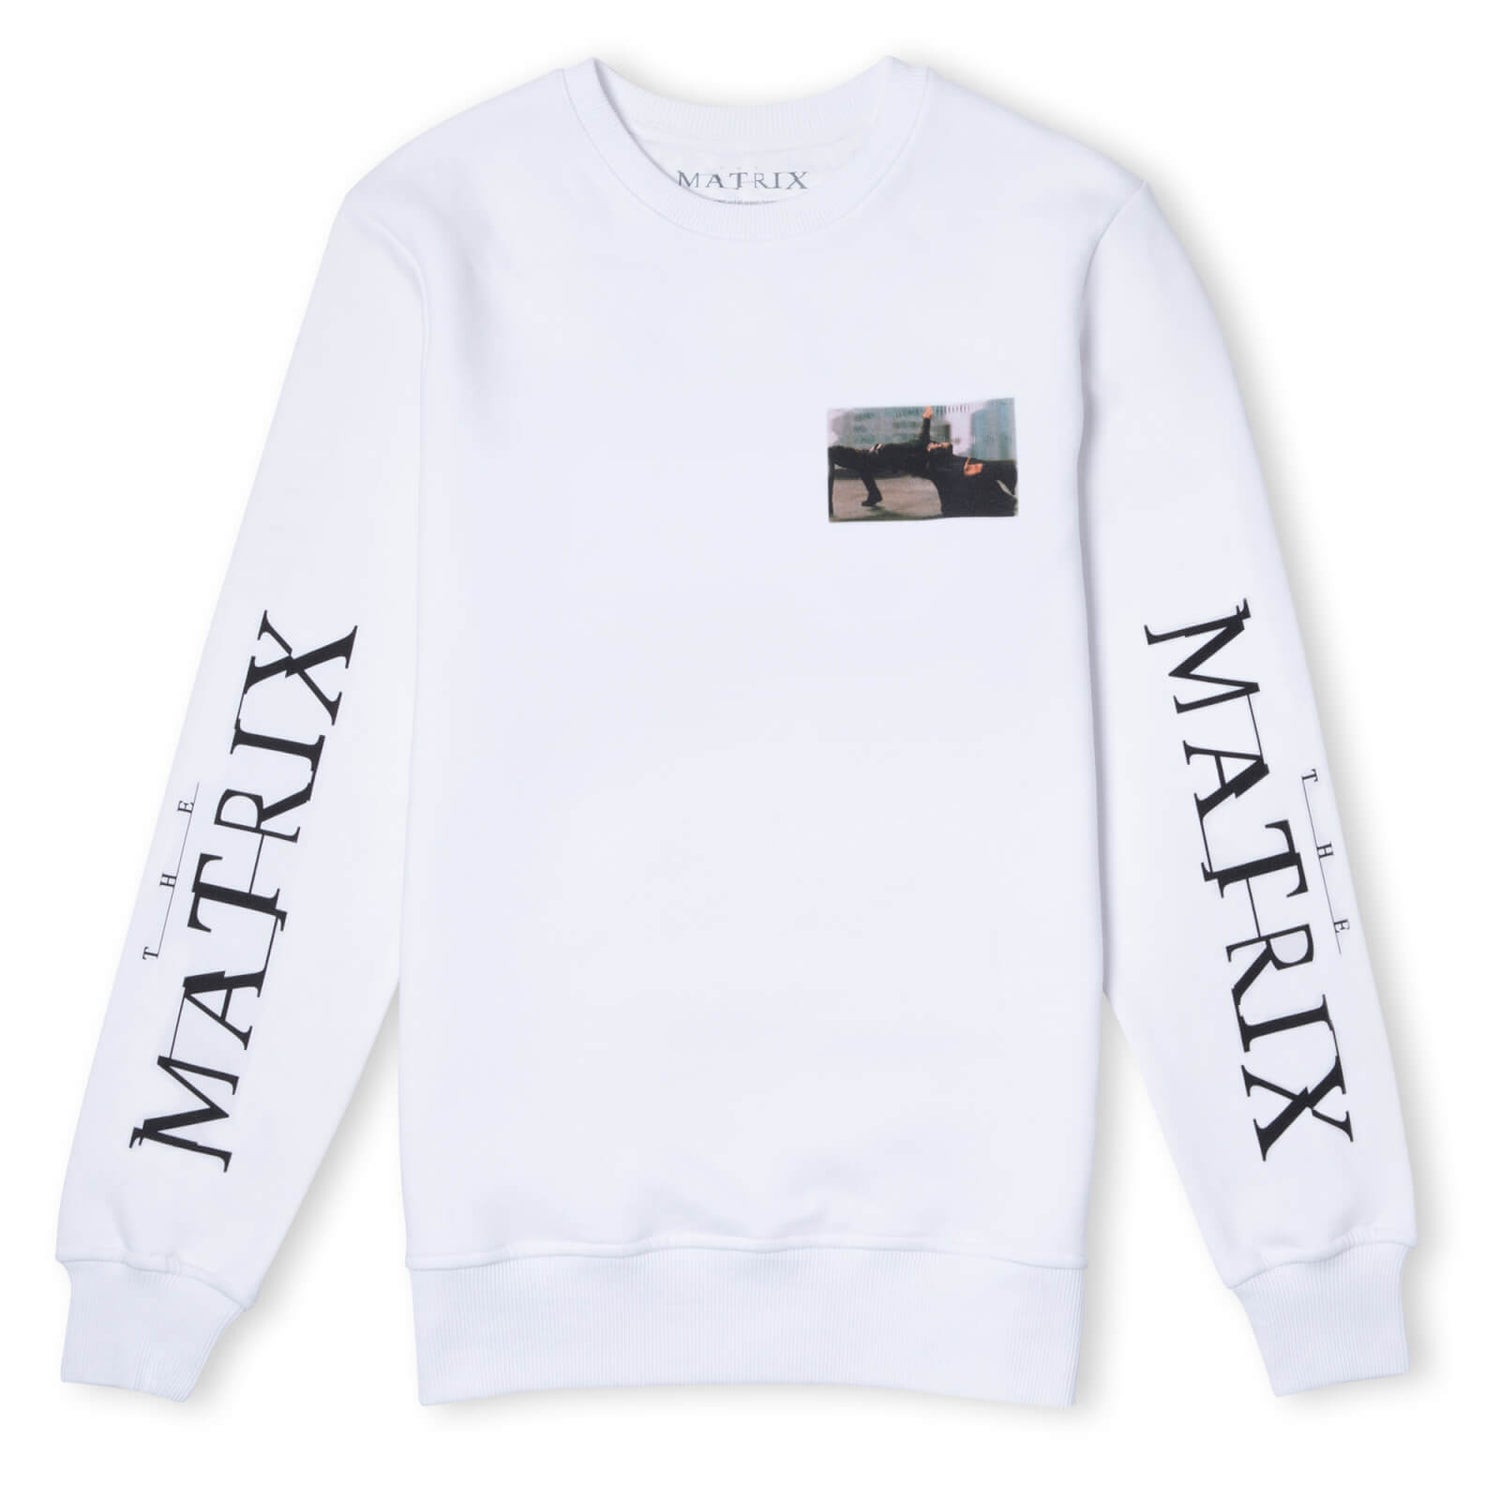 The Matrix Sweatshirt - White